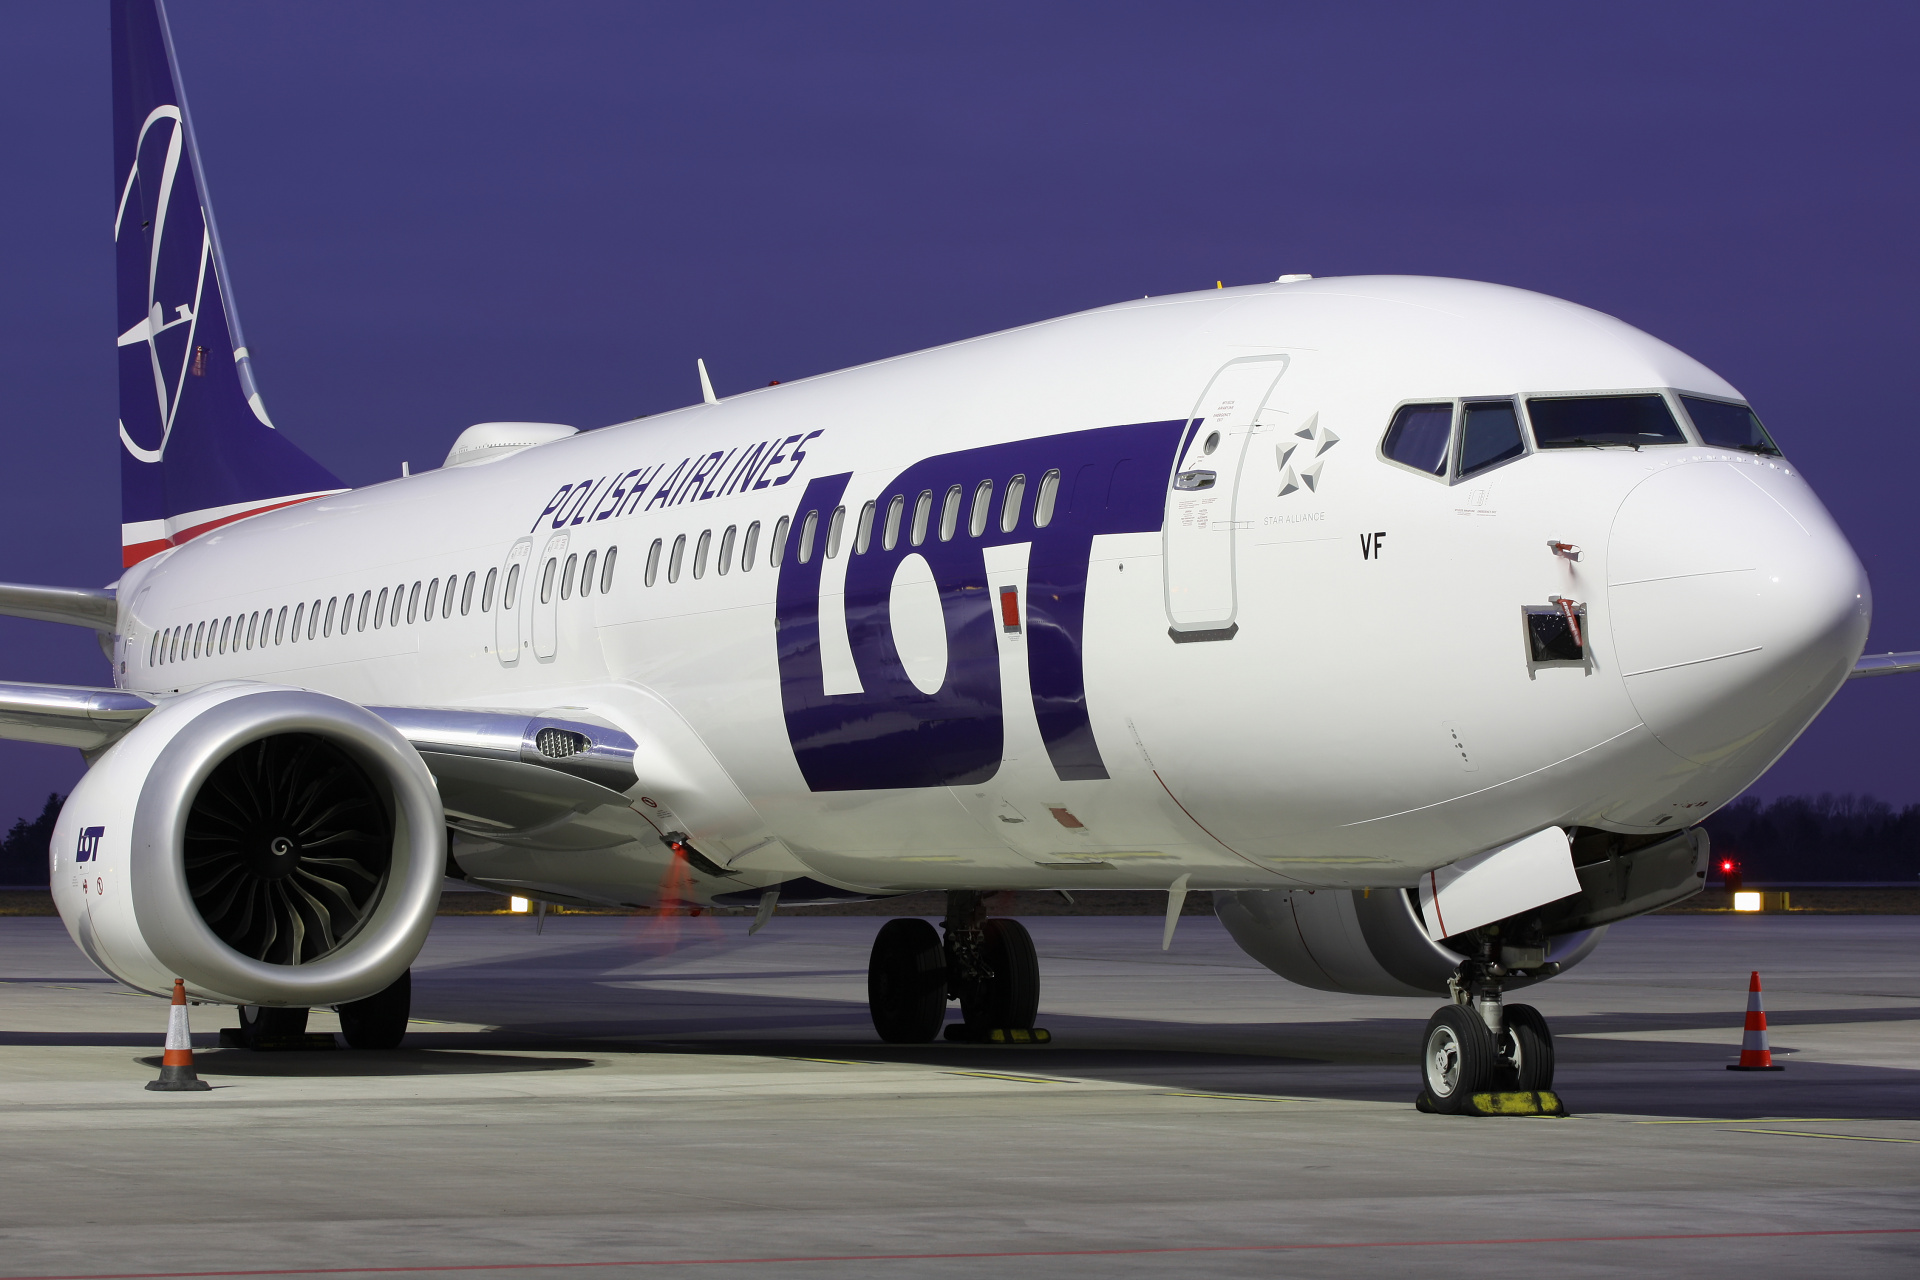 SP-LVF (Aircraft » EPWA Spotting » Boeing 737-8 MAX » LOT Polish Airlines)